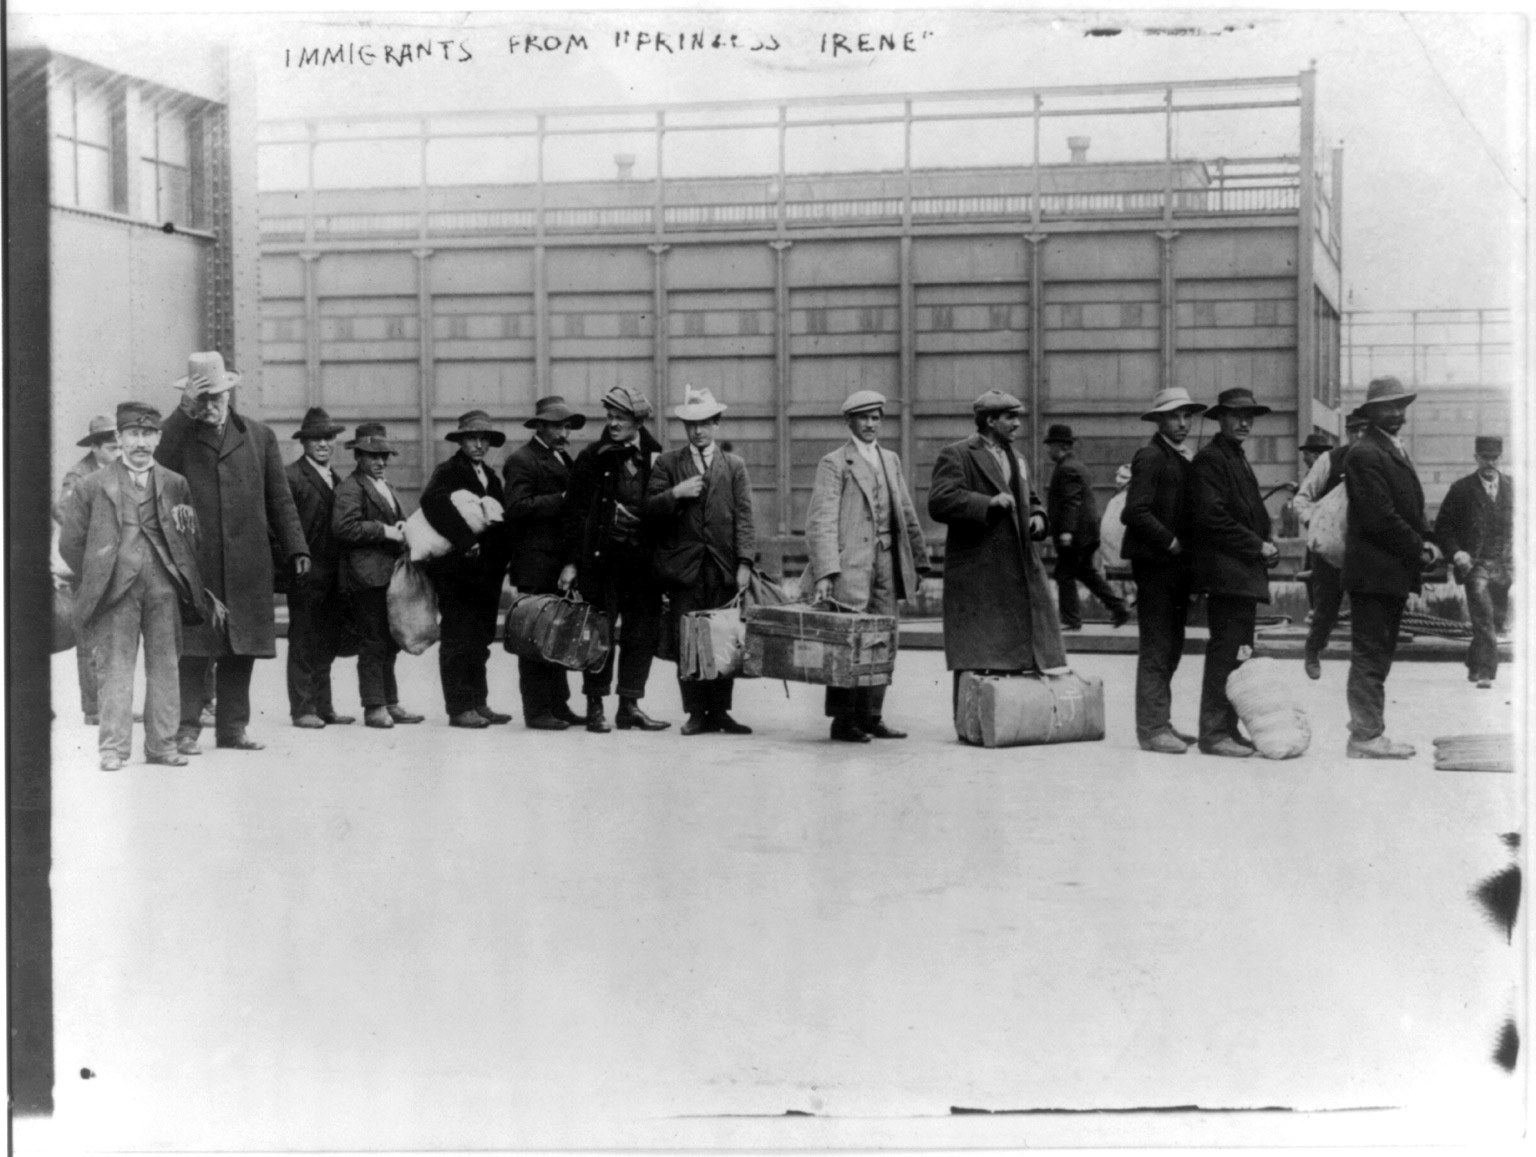 Immigrants from "Princess Irene," Ellis Island, 1911.